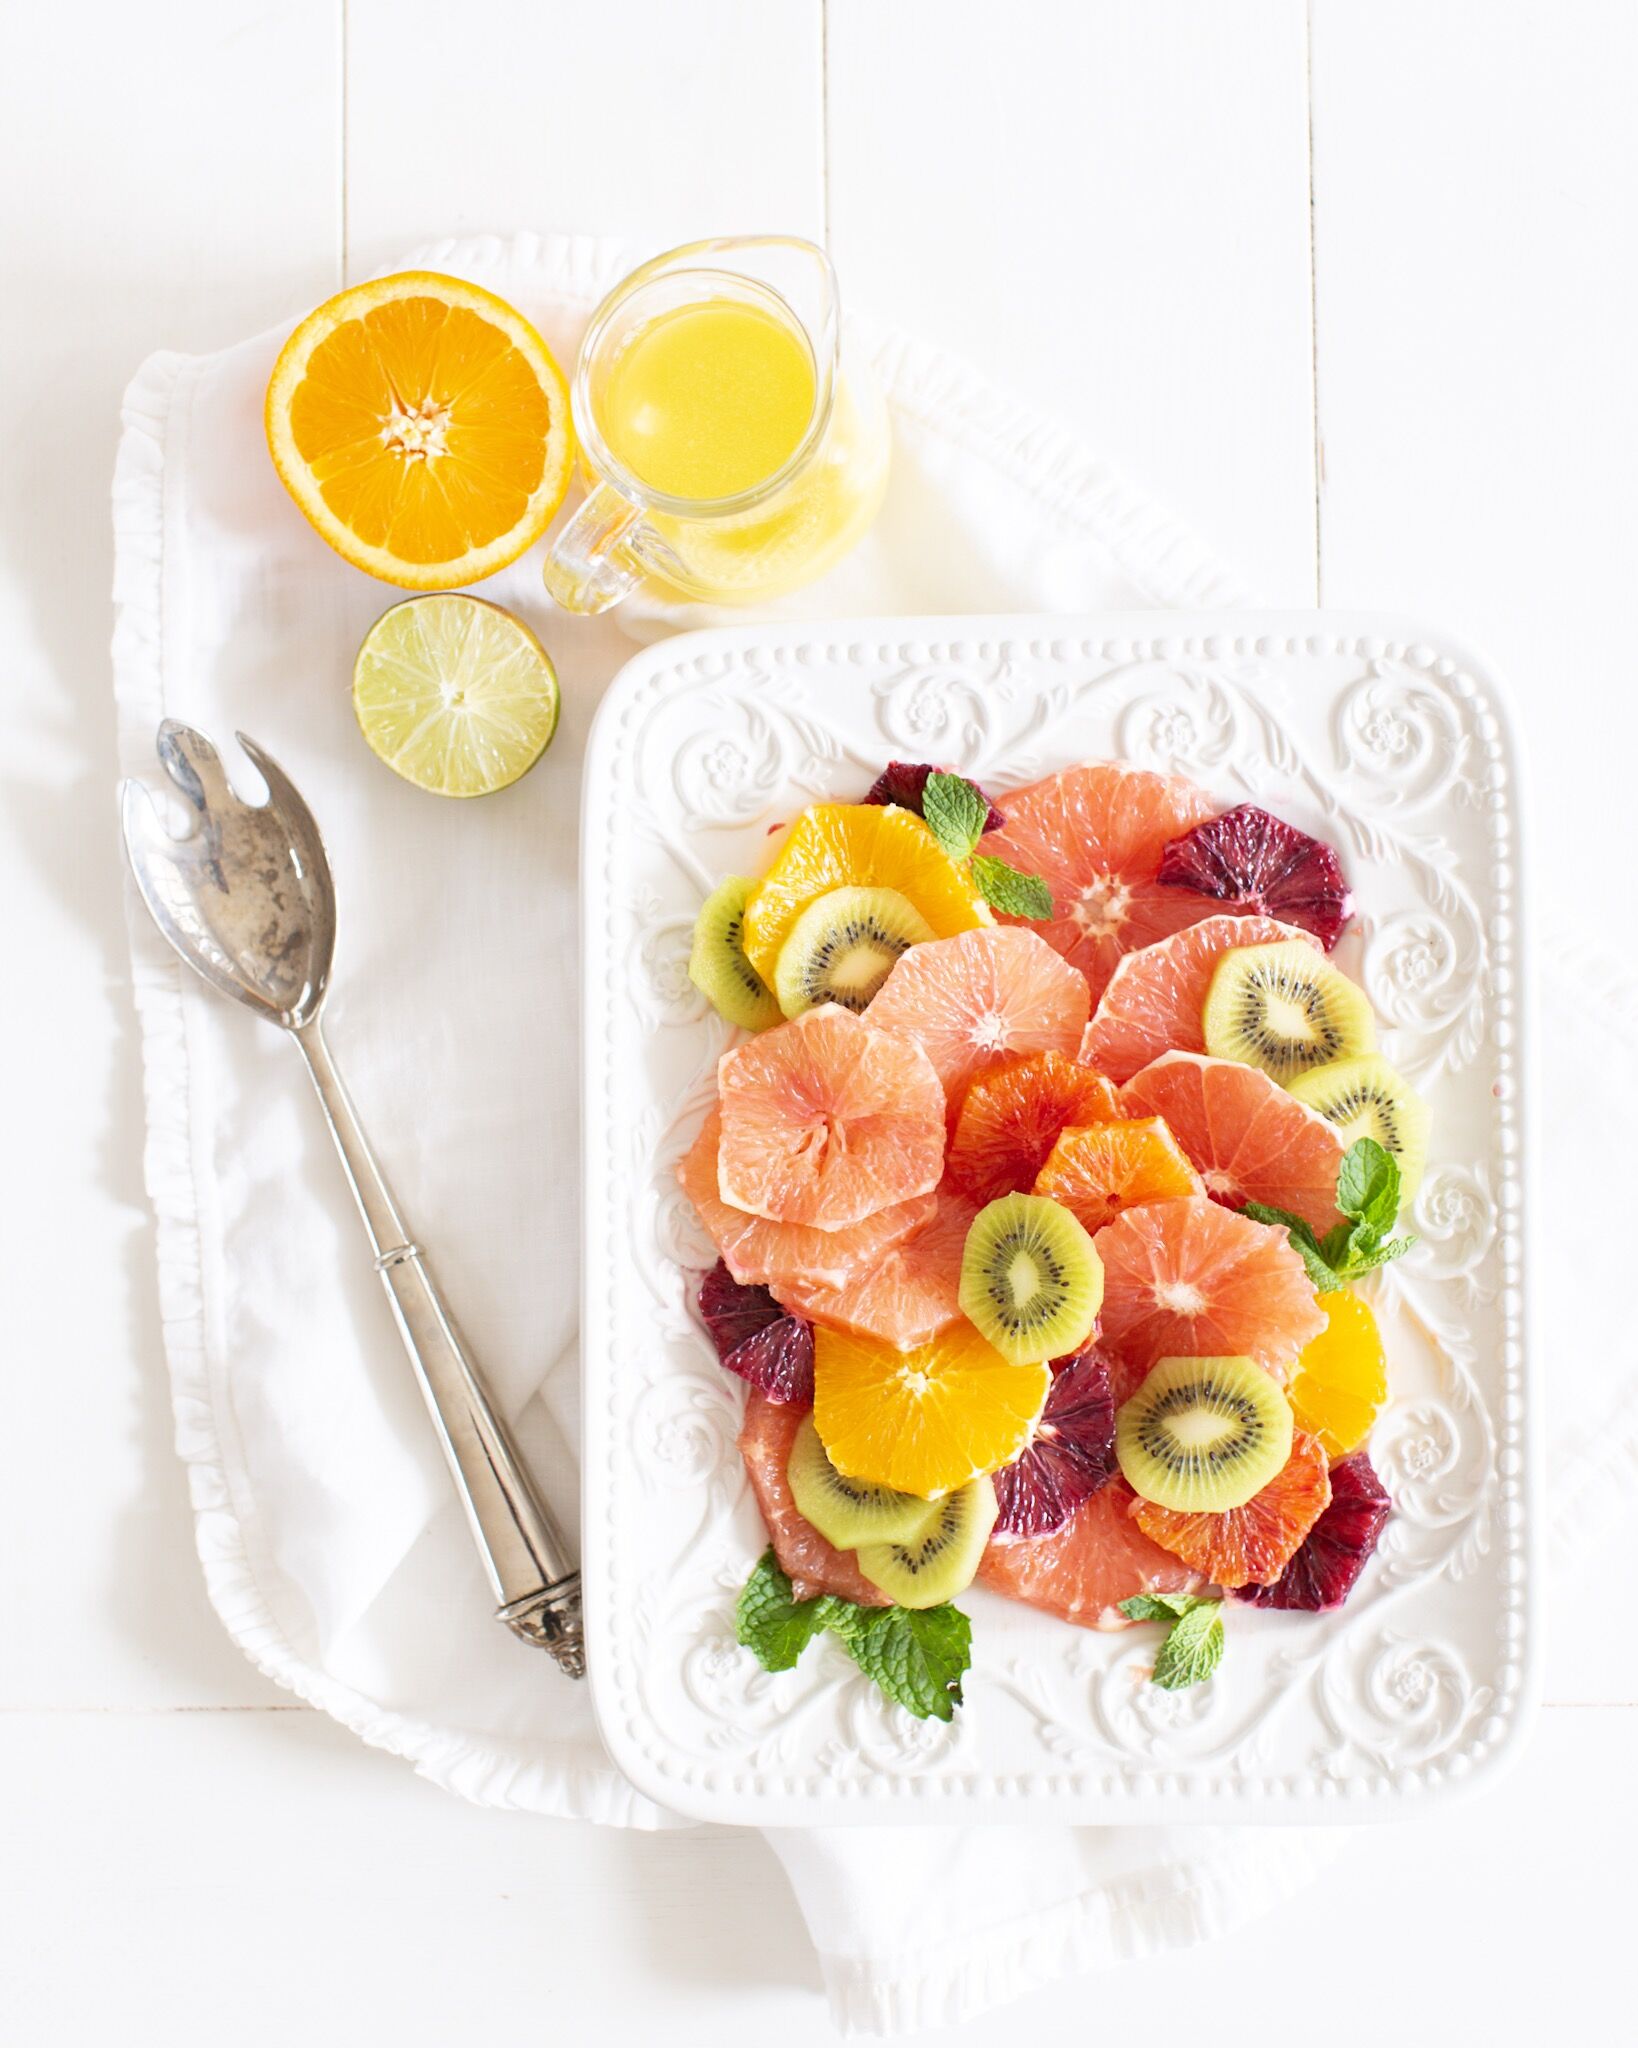 Mixed Citrus Kiwi Salad with Honey Lime Vinaigrette